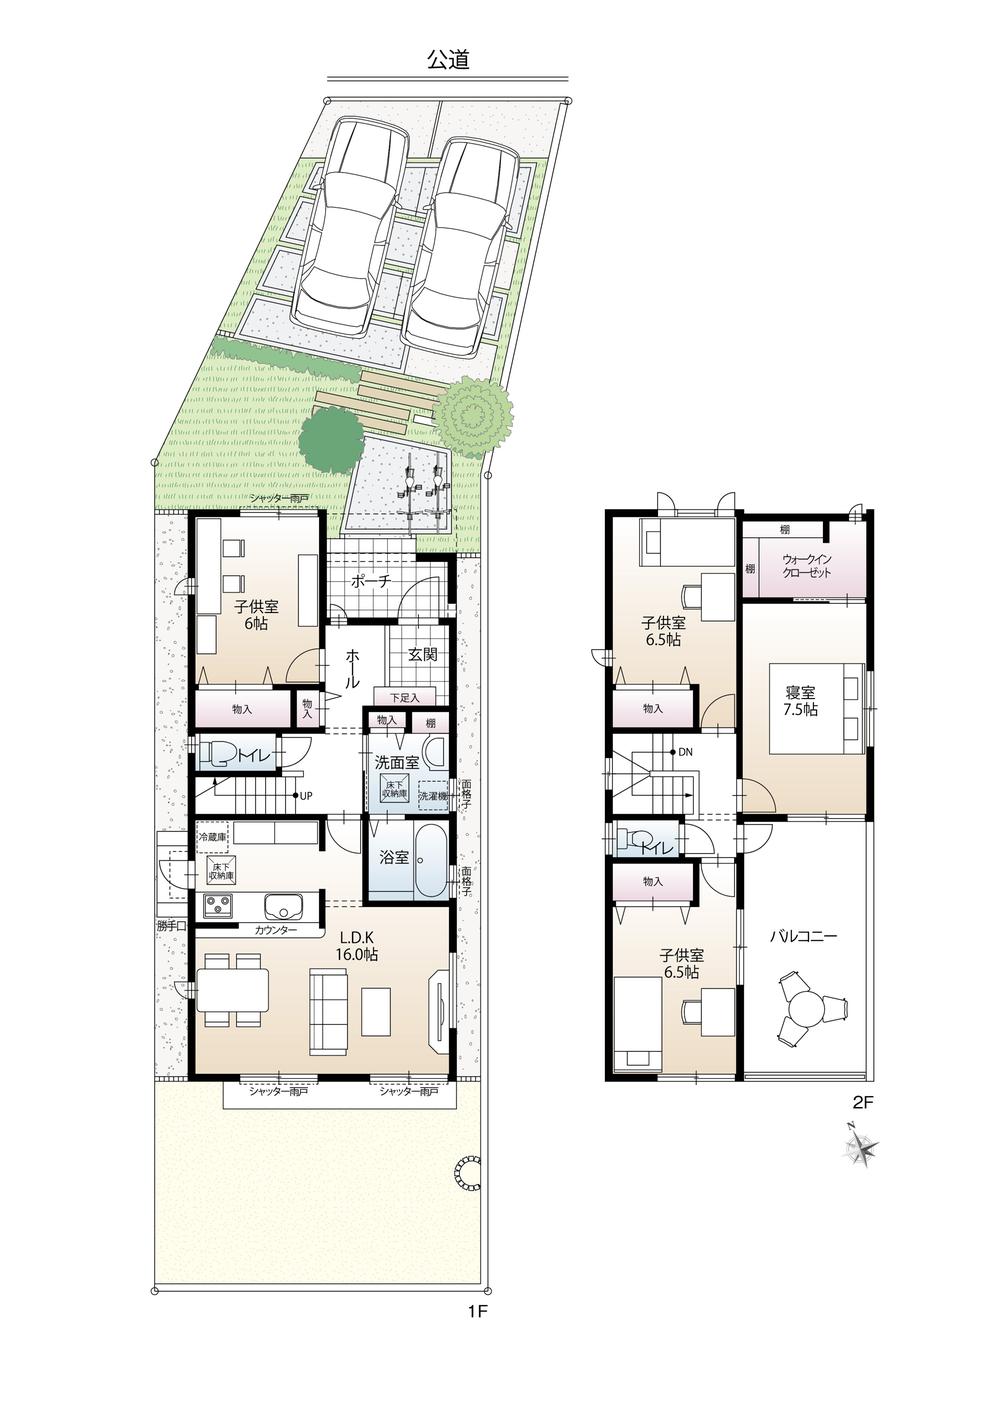 Floor plan. (No.2), Price 33,900,000 yen, 4LDK+S, Land area 167.55 sq m , Building area 108.79 sq m